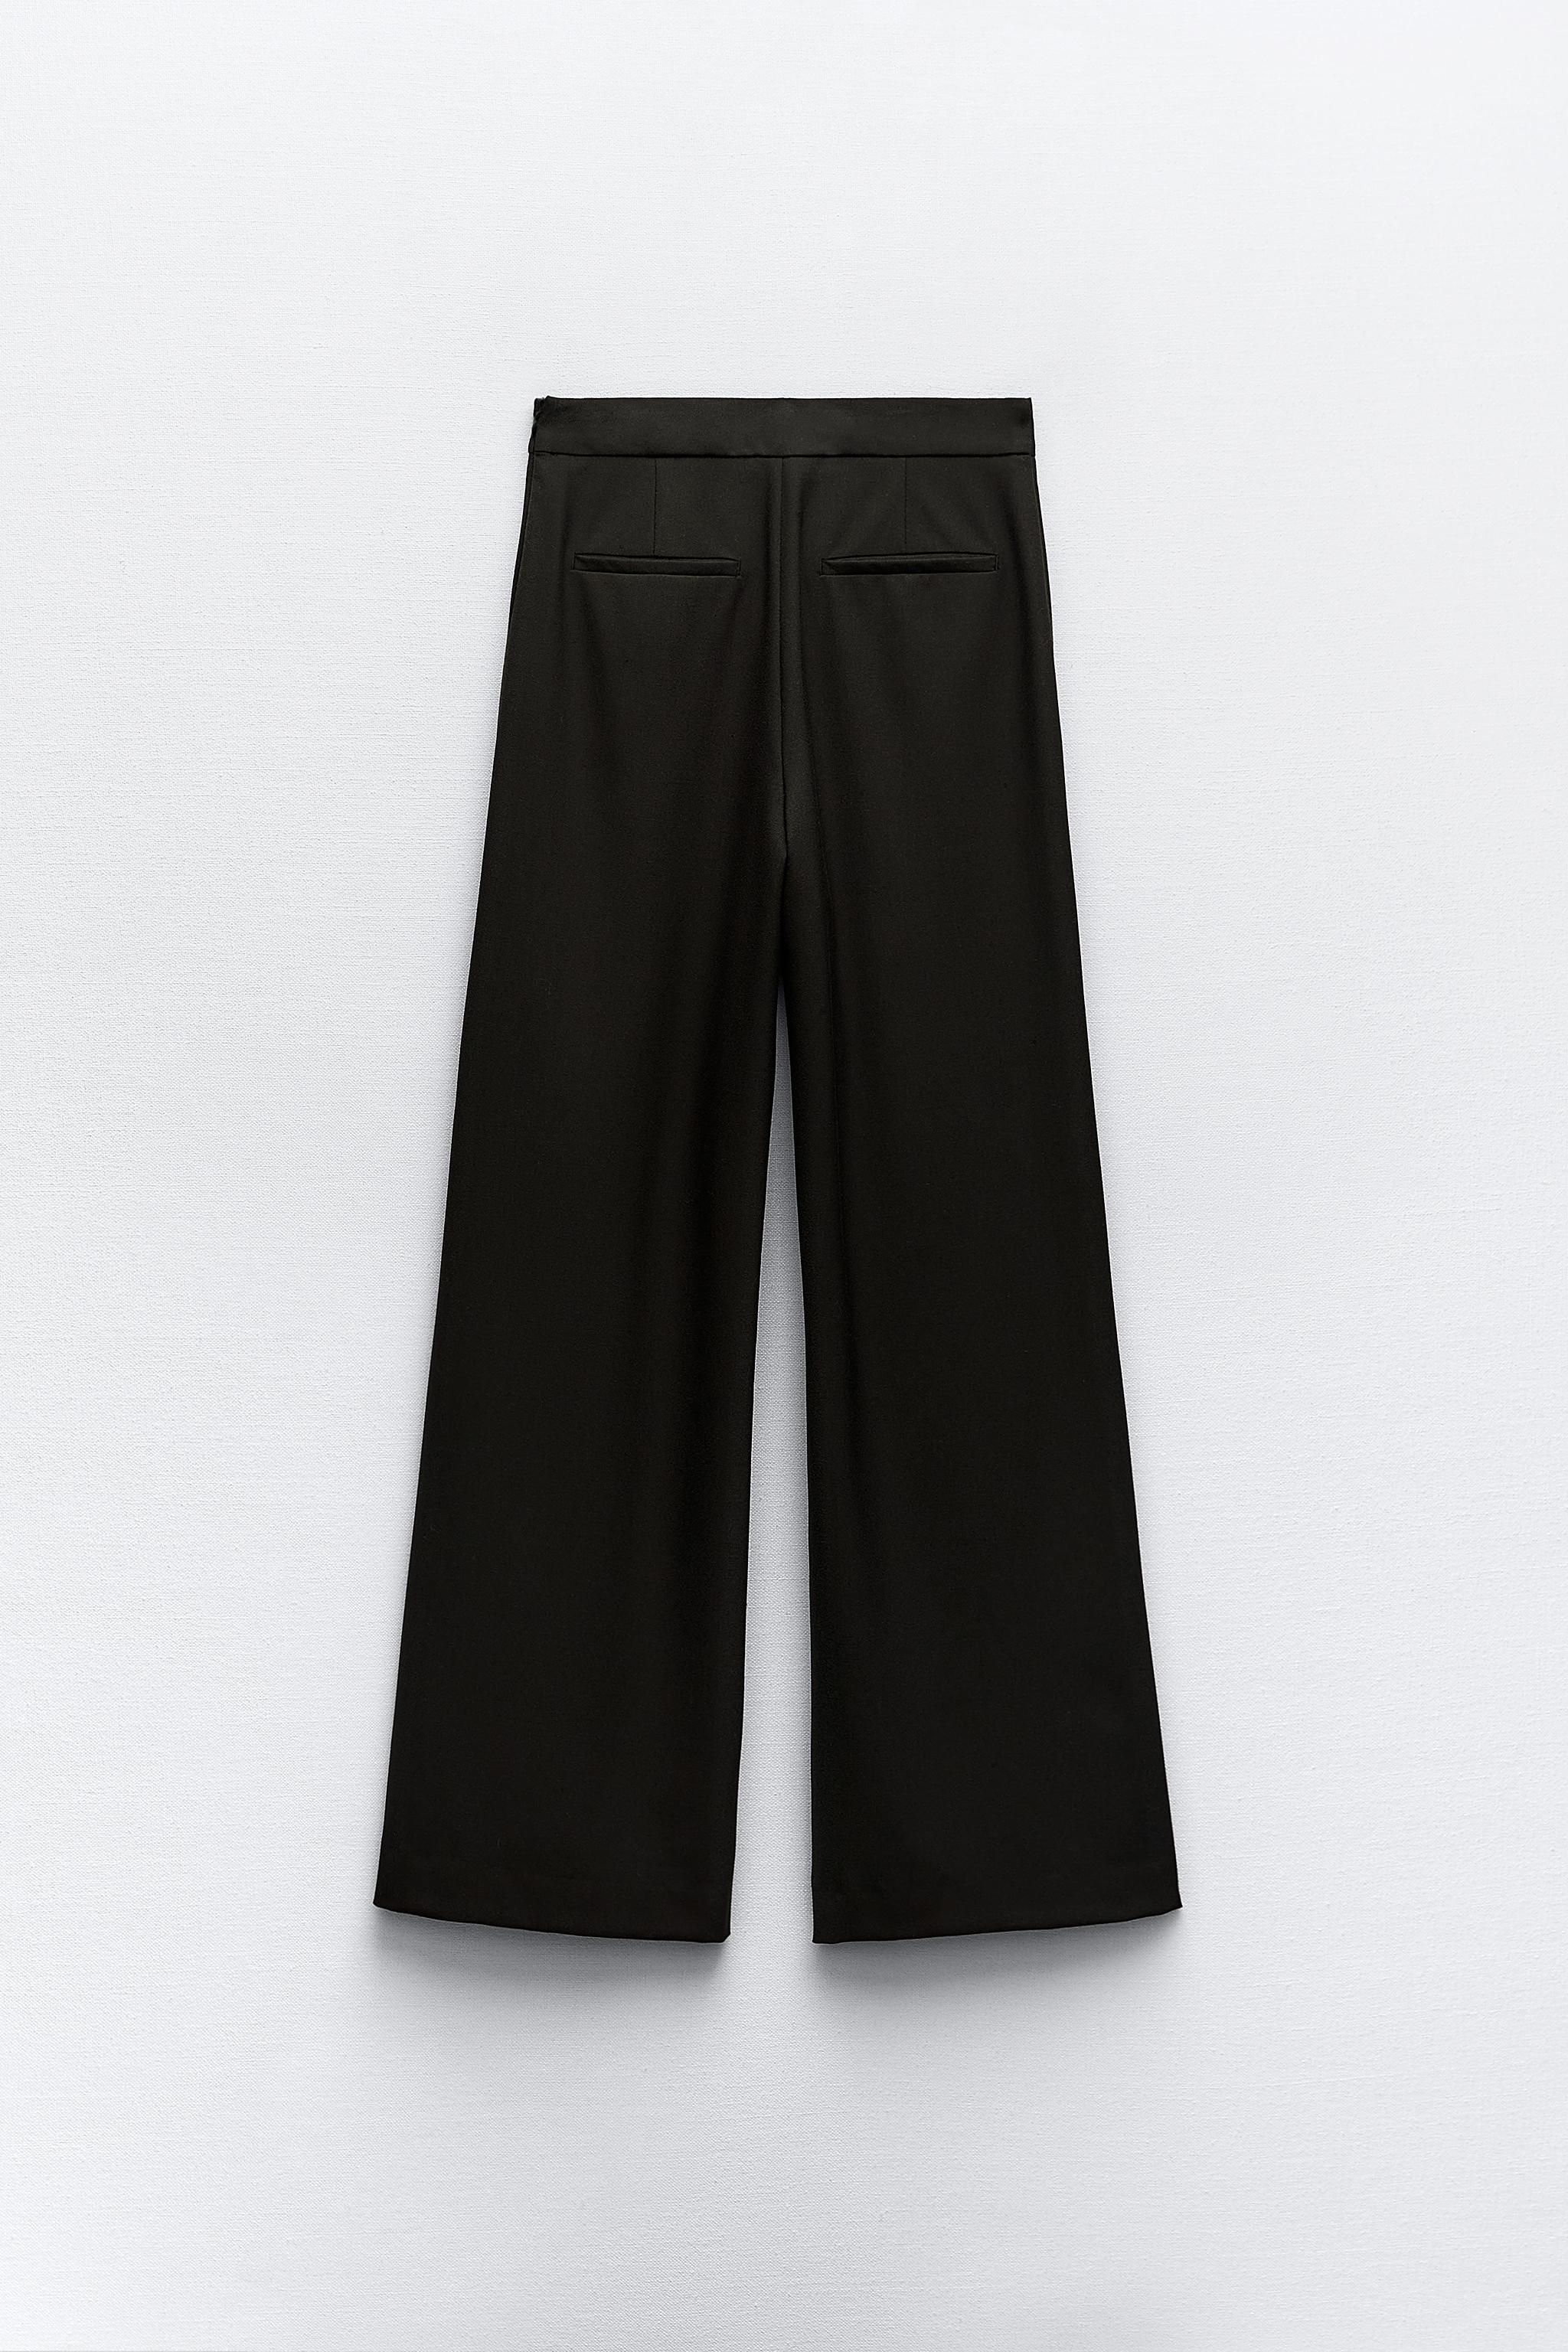 Zara, Pants & Jumpsuits, Zara Wide Leg Tapered Ankle Pants Blacksmall